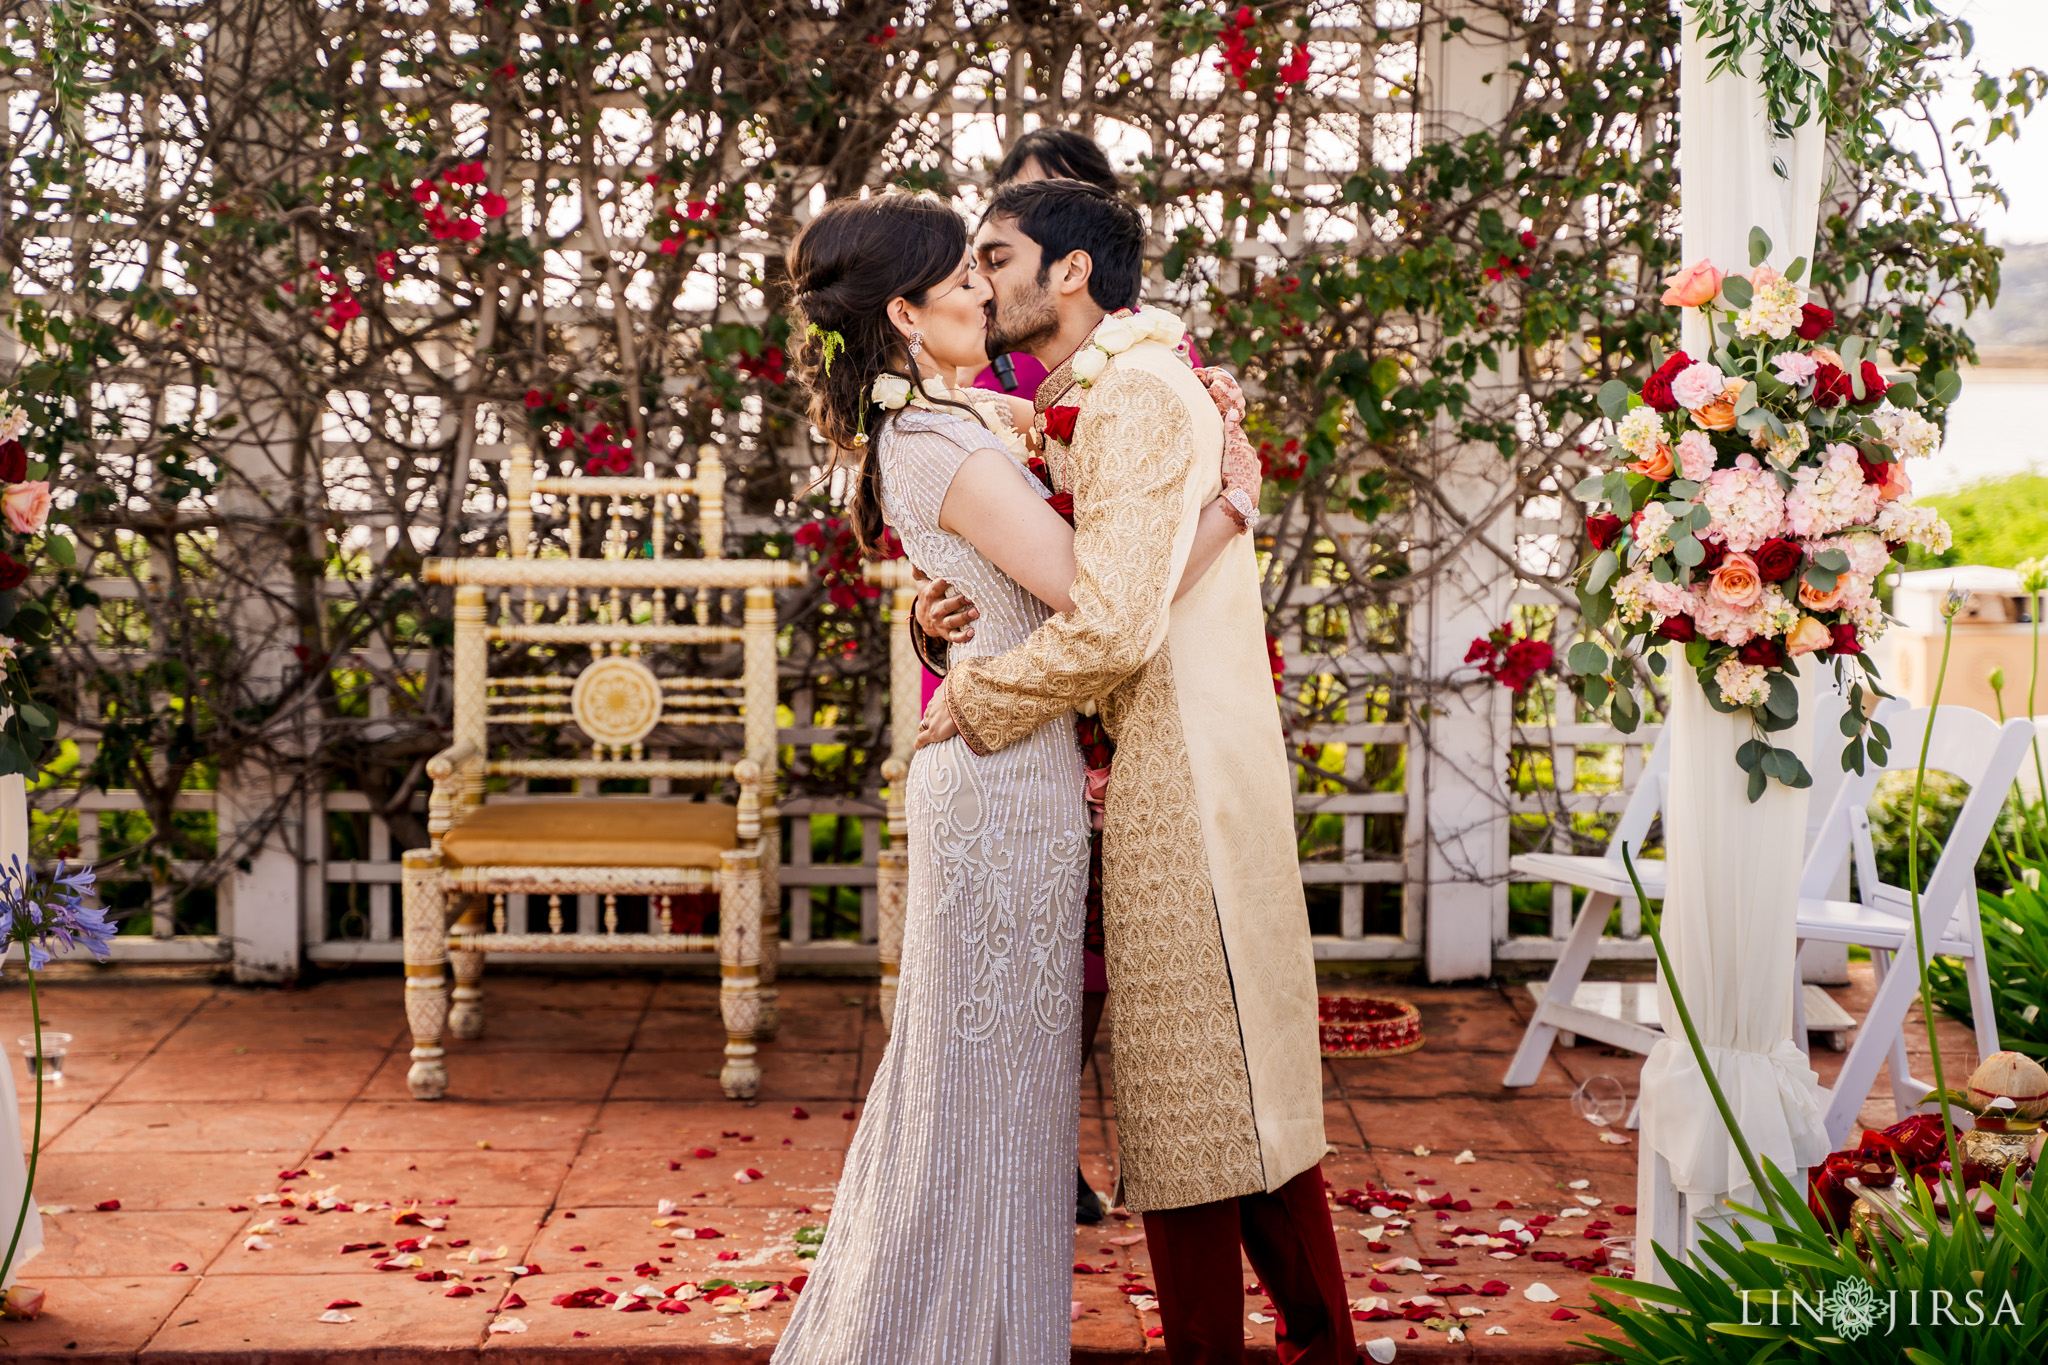 Hilton Mission Bay San Diego South Asian Wedding Photography kiss